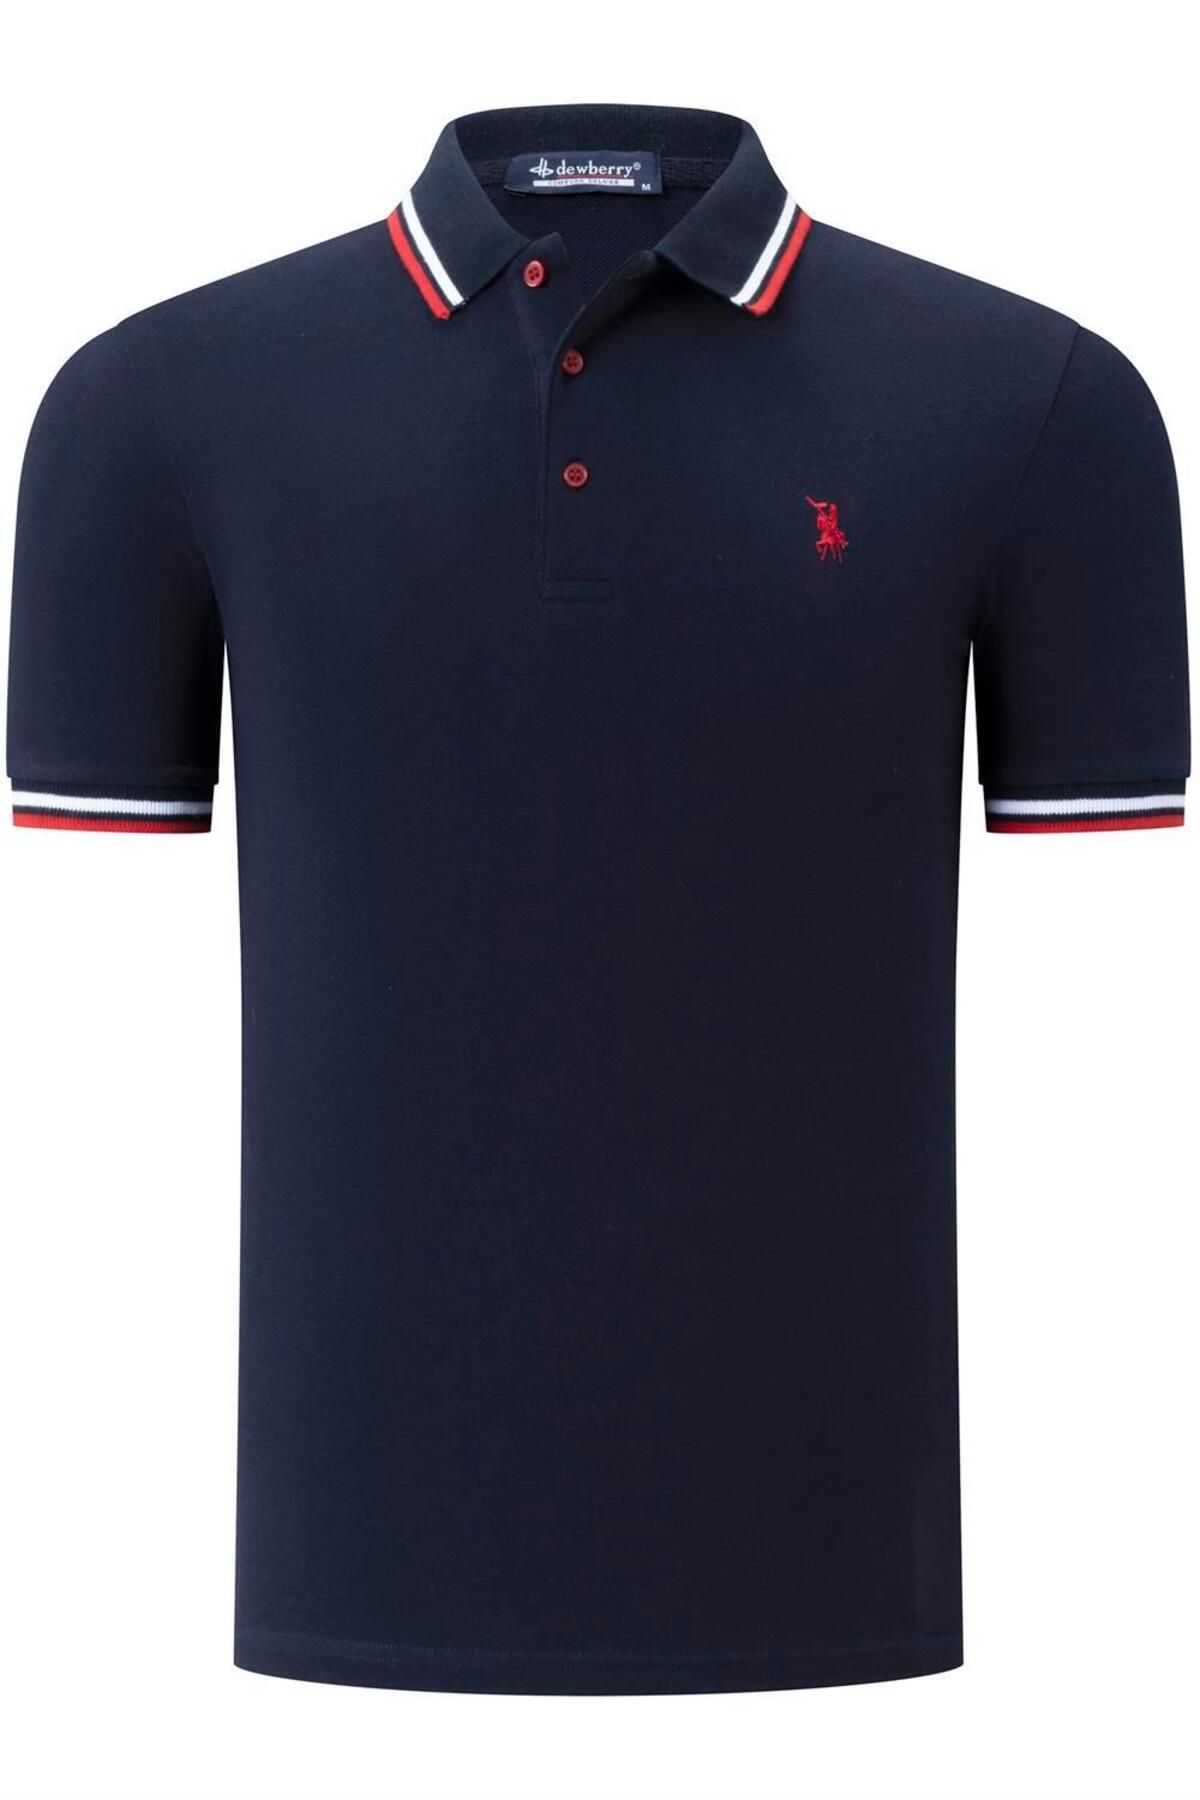 Dewberry ست شش عددی تی شرت مردانه T8594 DEWBERRY-مشکی-سفید-آبی تیره-خاکستری-بژ-قرمز کلارت